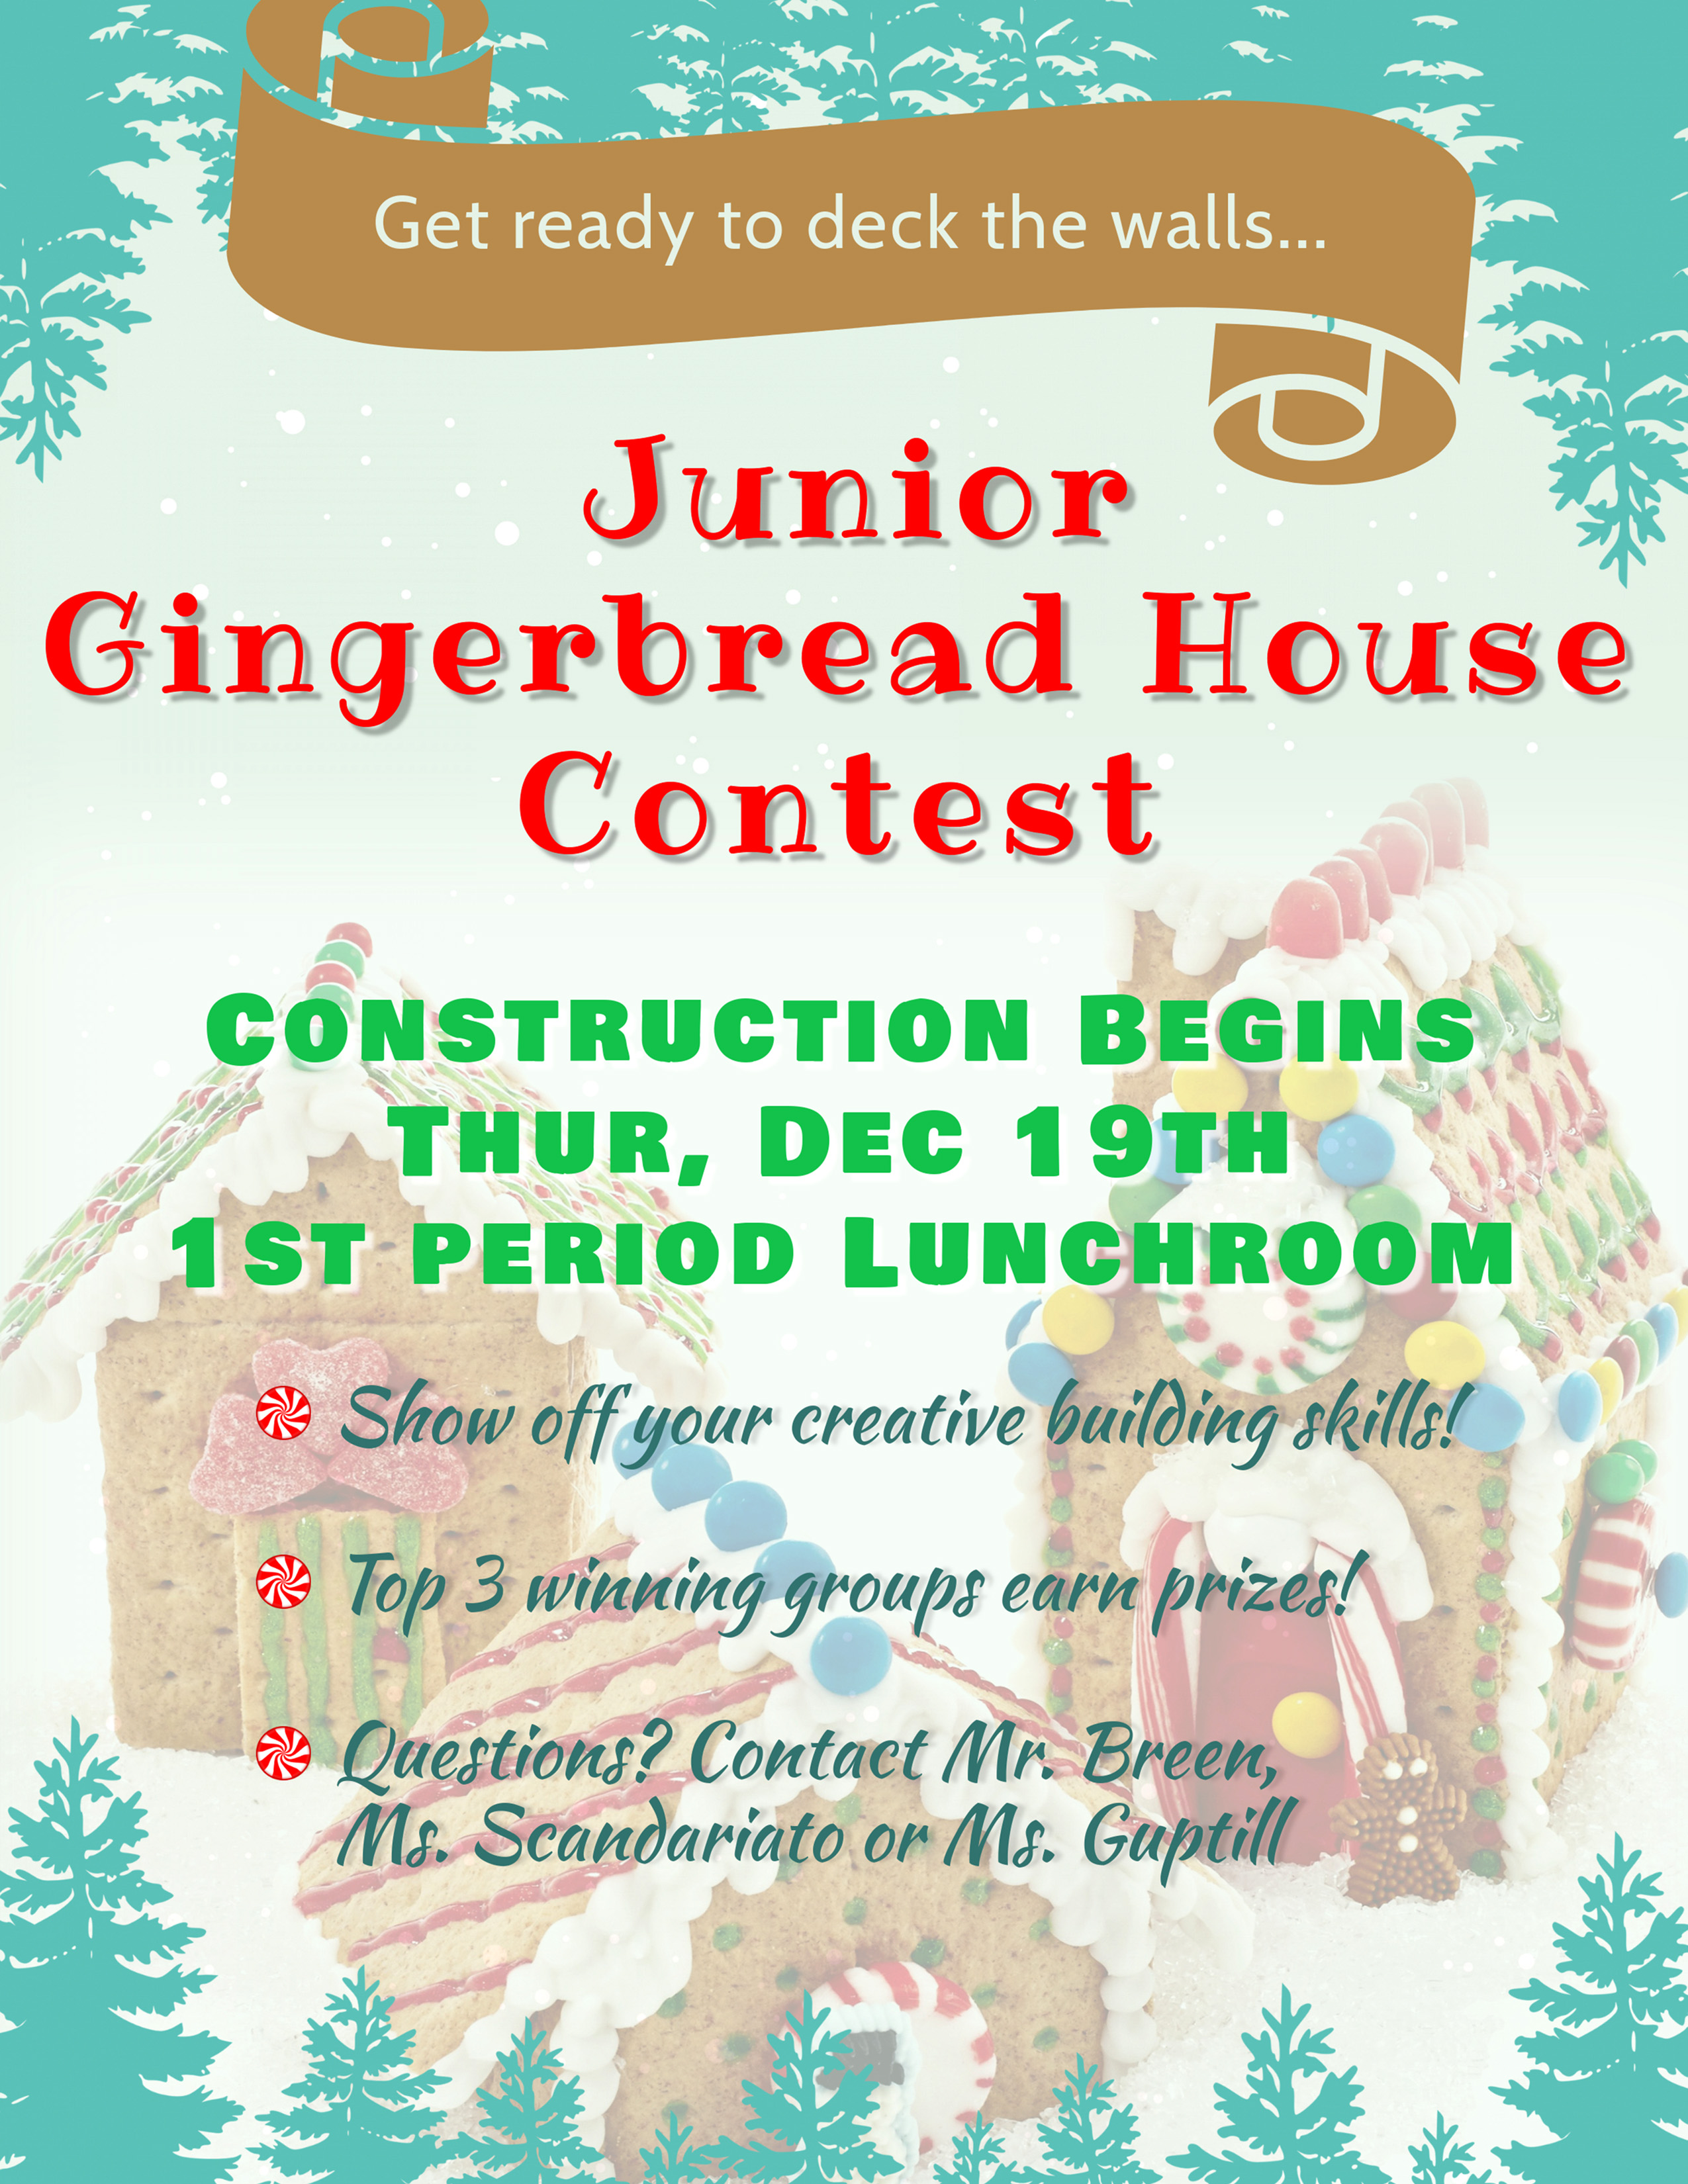 Junior Gingerbread House Contest